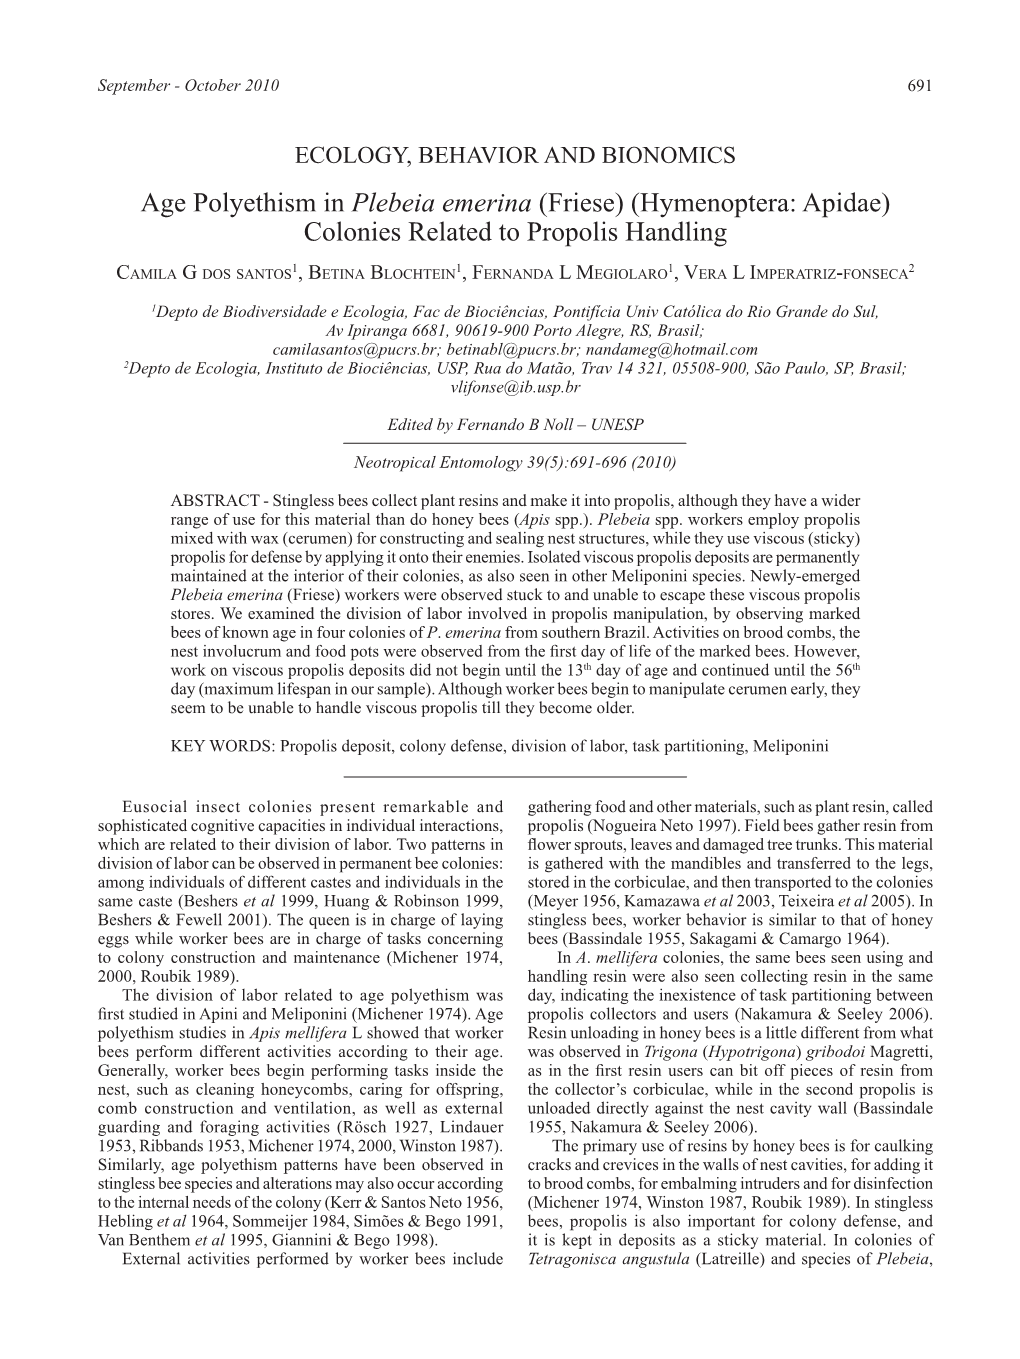 Age Polyethism in Plebeia Emerina (Friese) (Hymenoptera: Apidae) Colonies Related to Propolis Handling